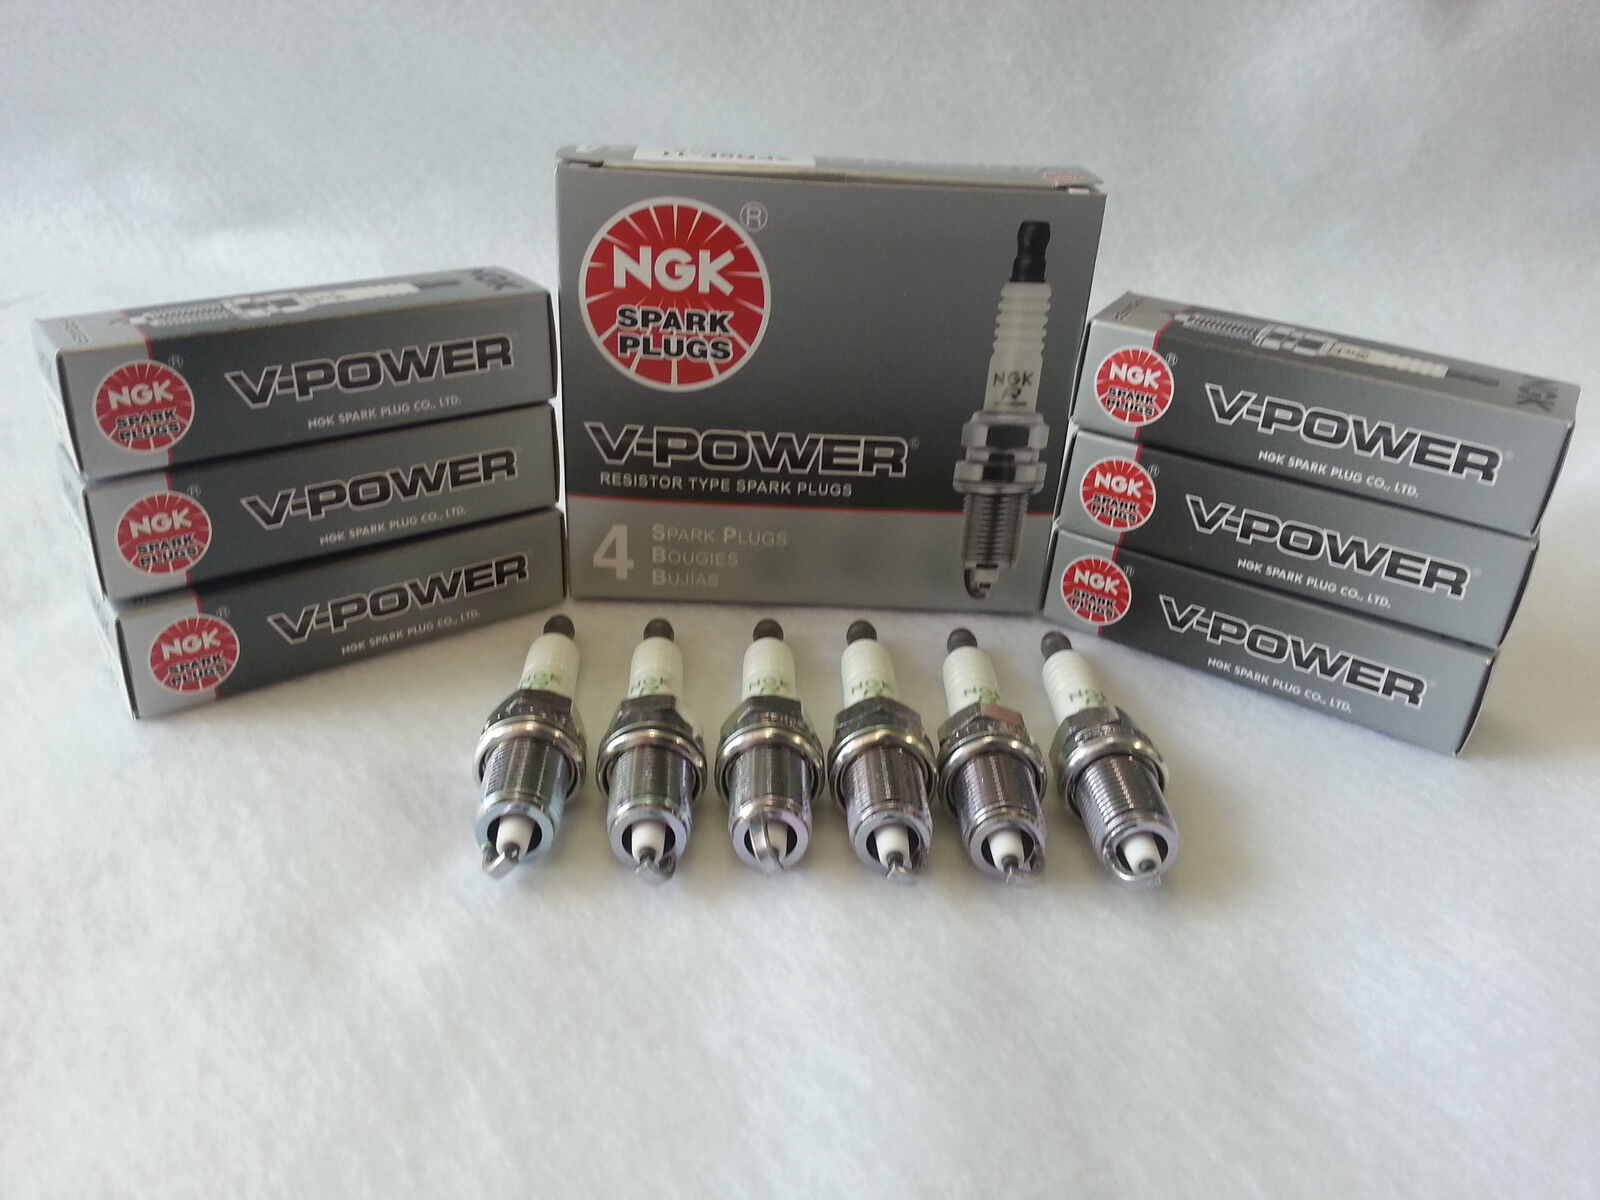 6-New NGK V-Power Copper Spark Plugs BPR6ES #7131 Made in Japan 